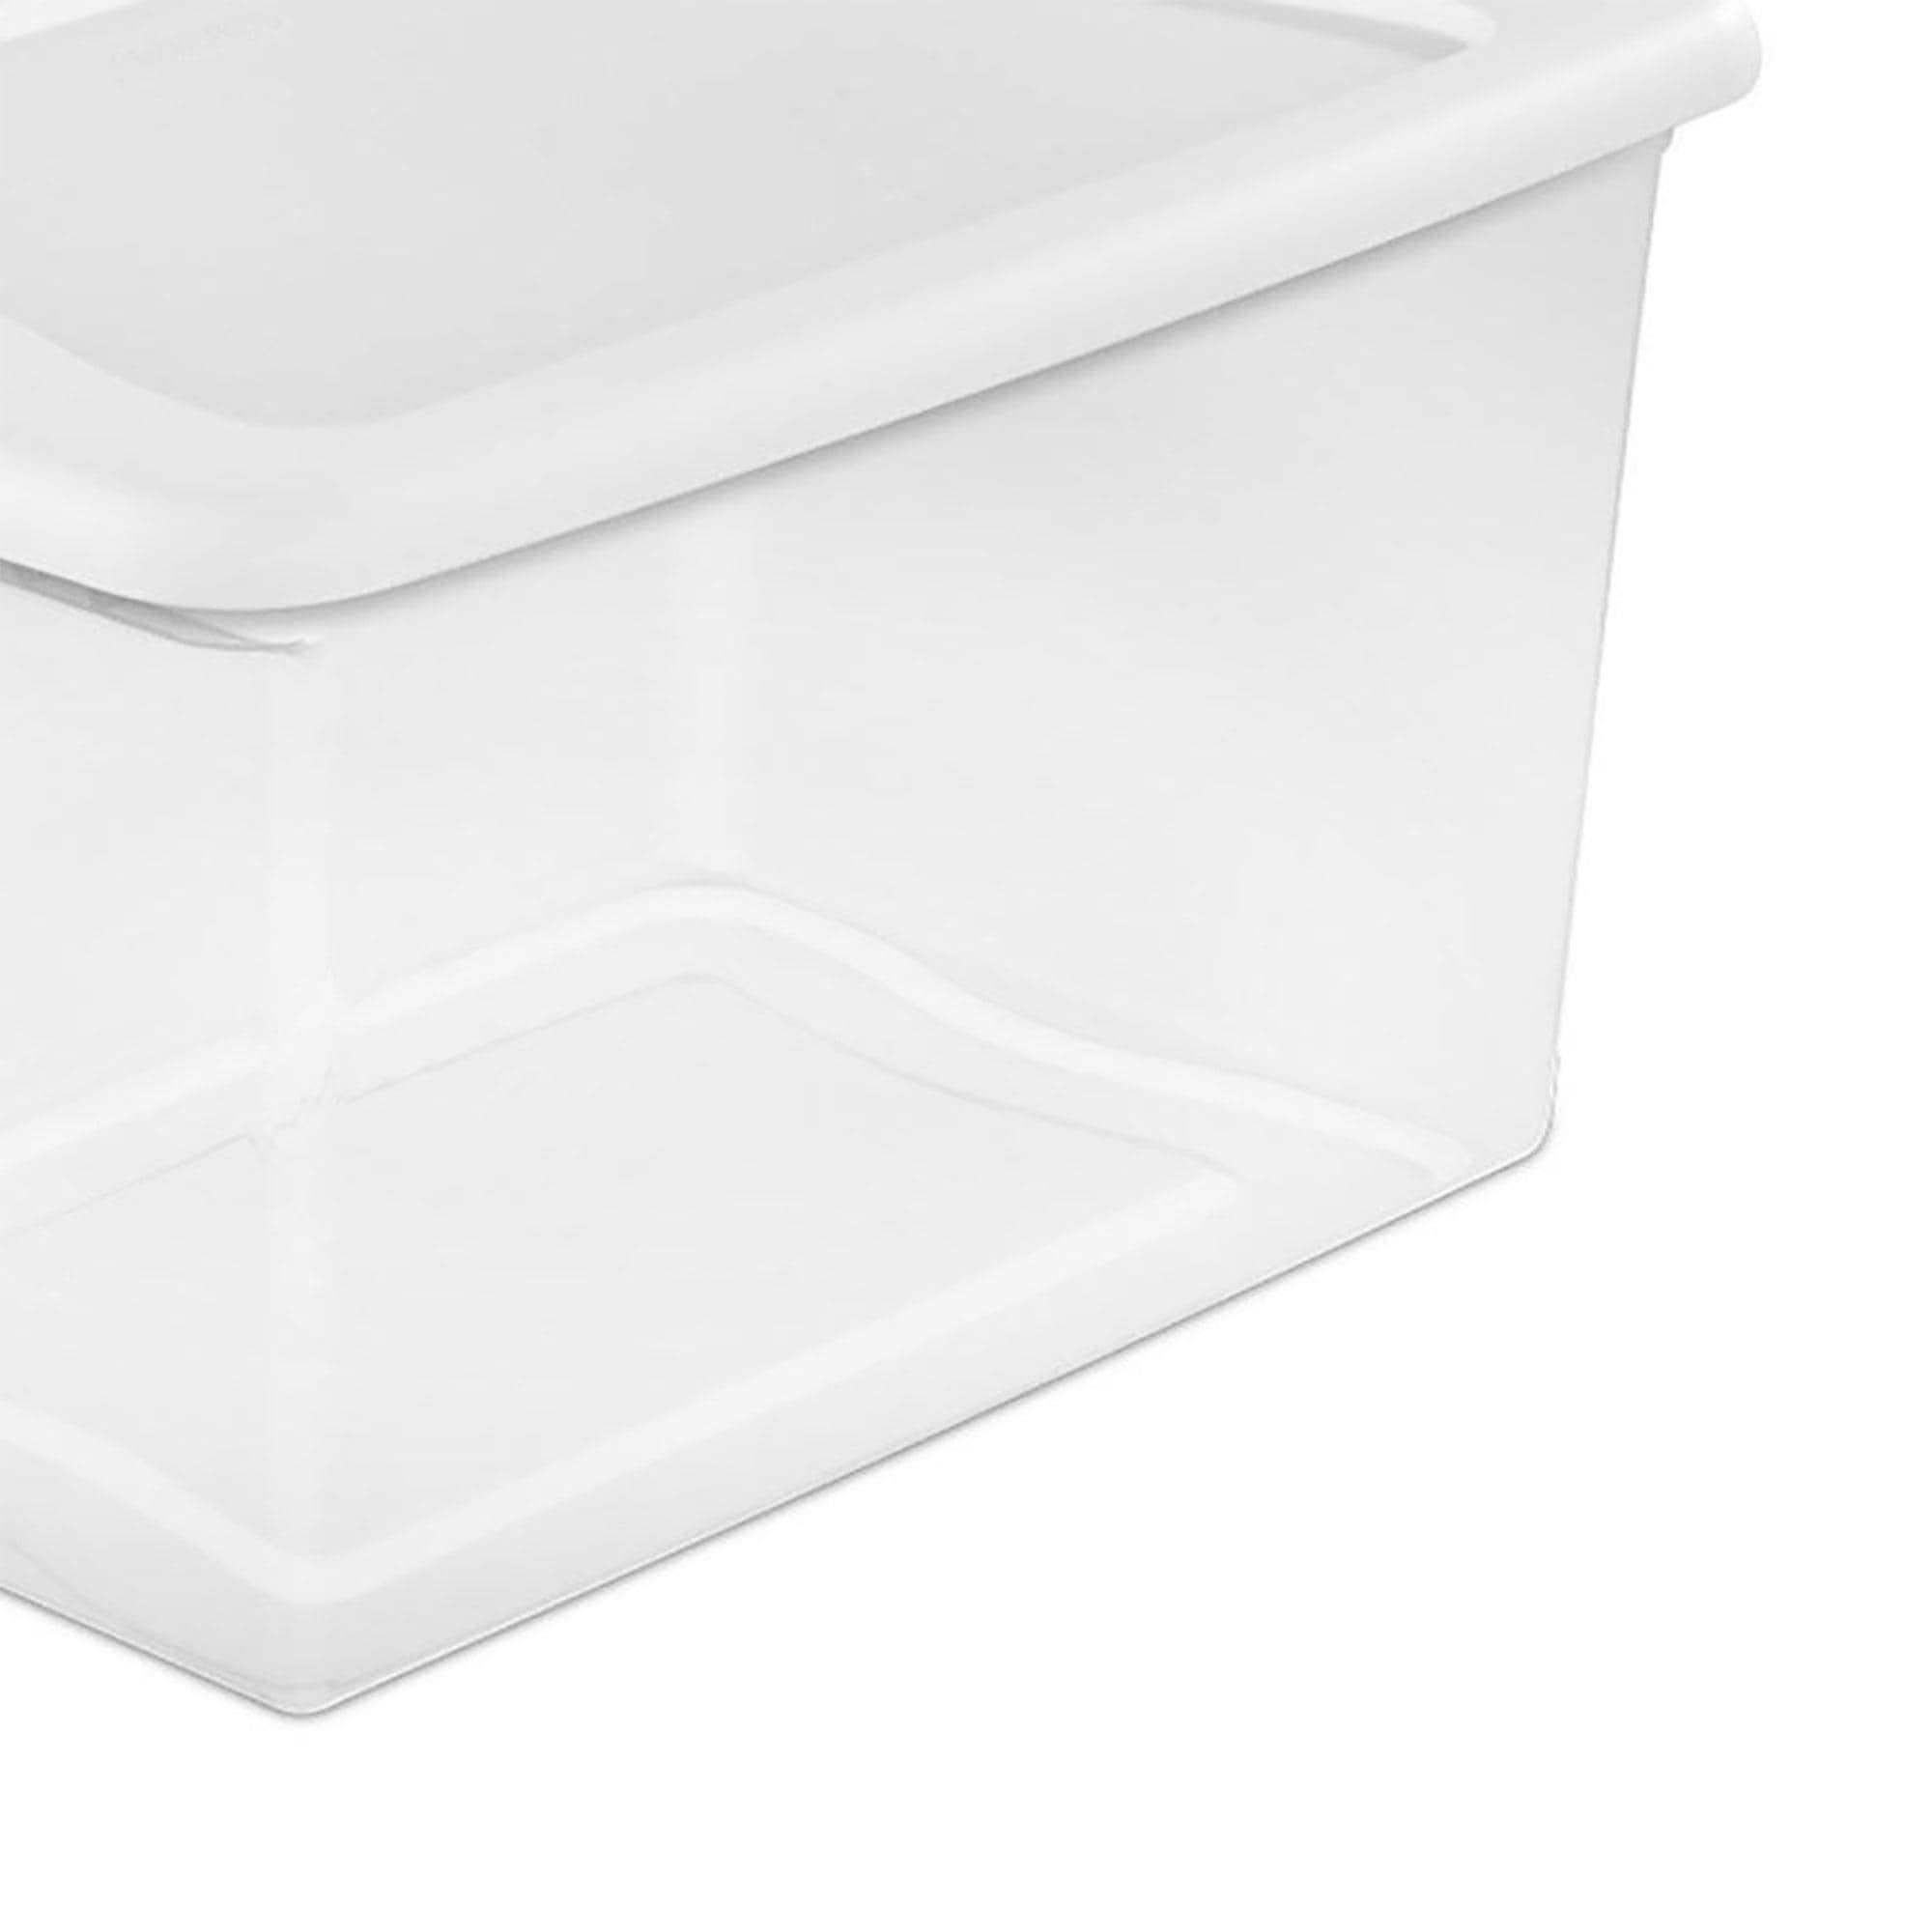 Sterilite 64 Quart Clear Plastic Storage Bin with White Latch Lid, 24 Pack  